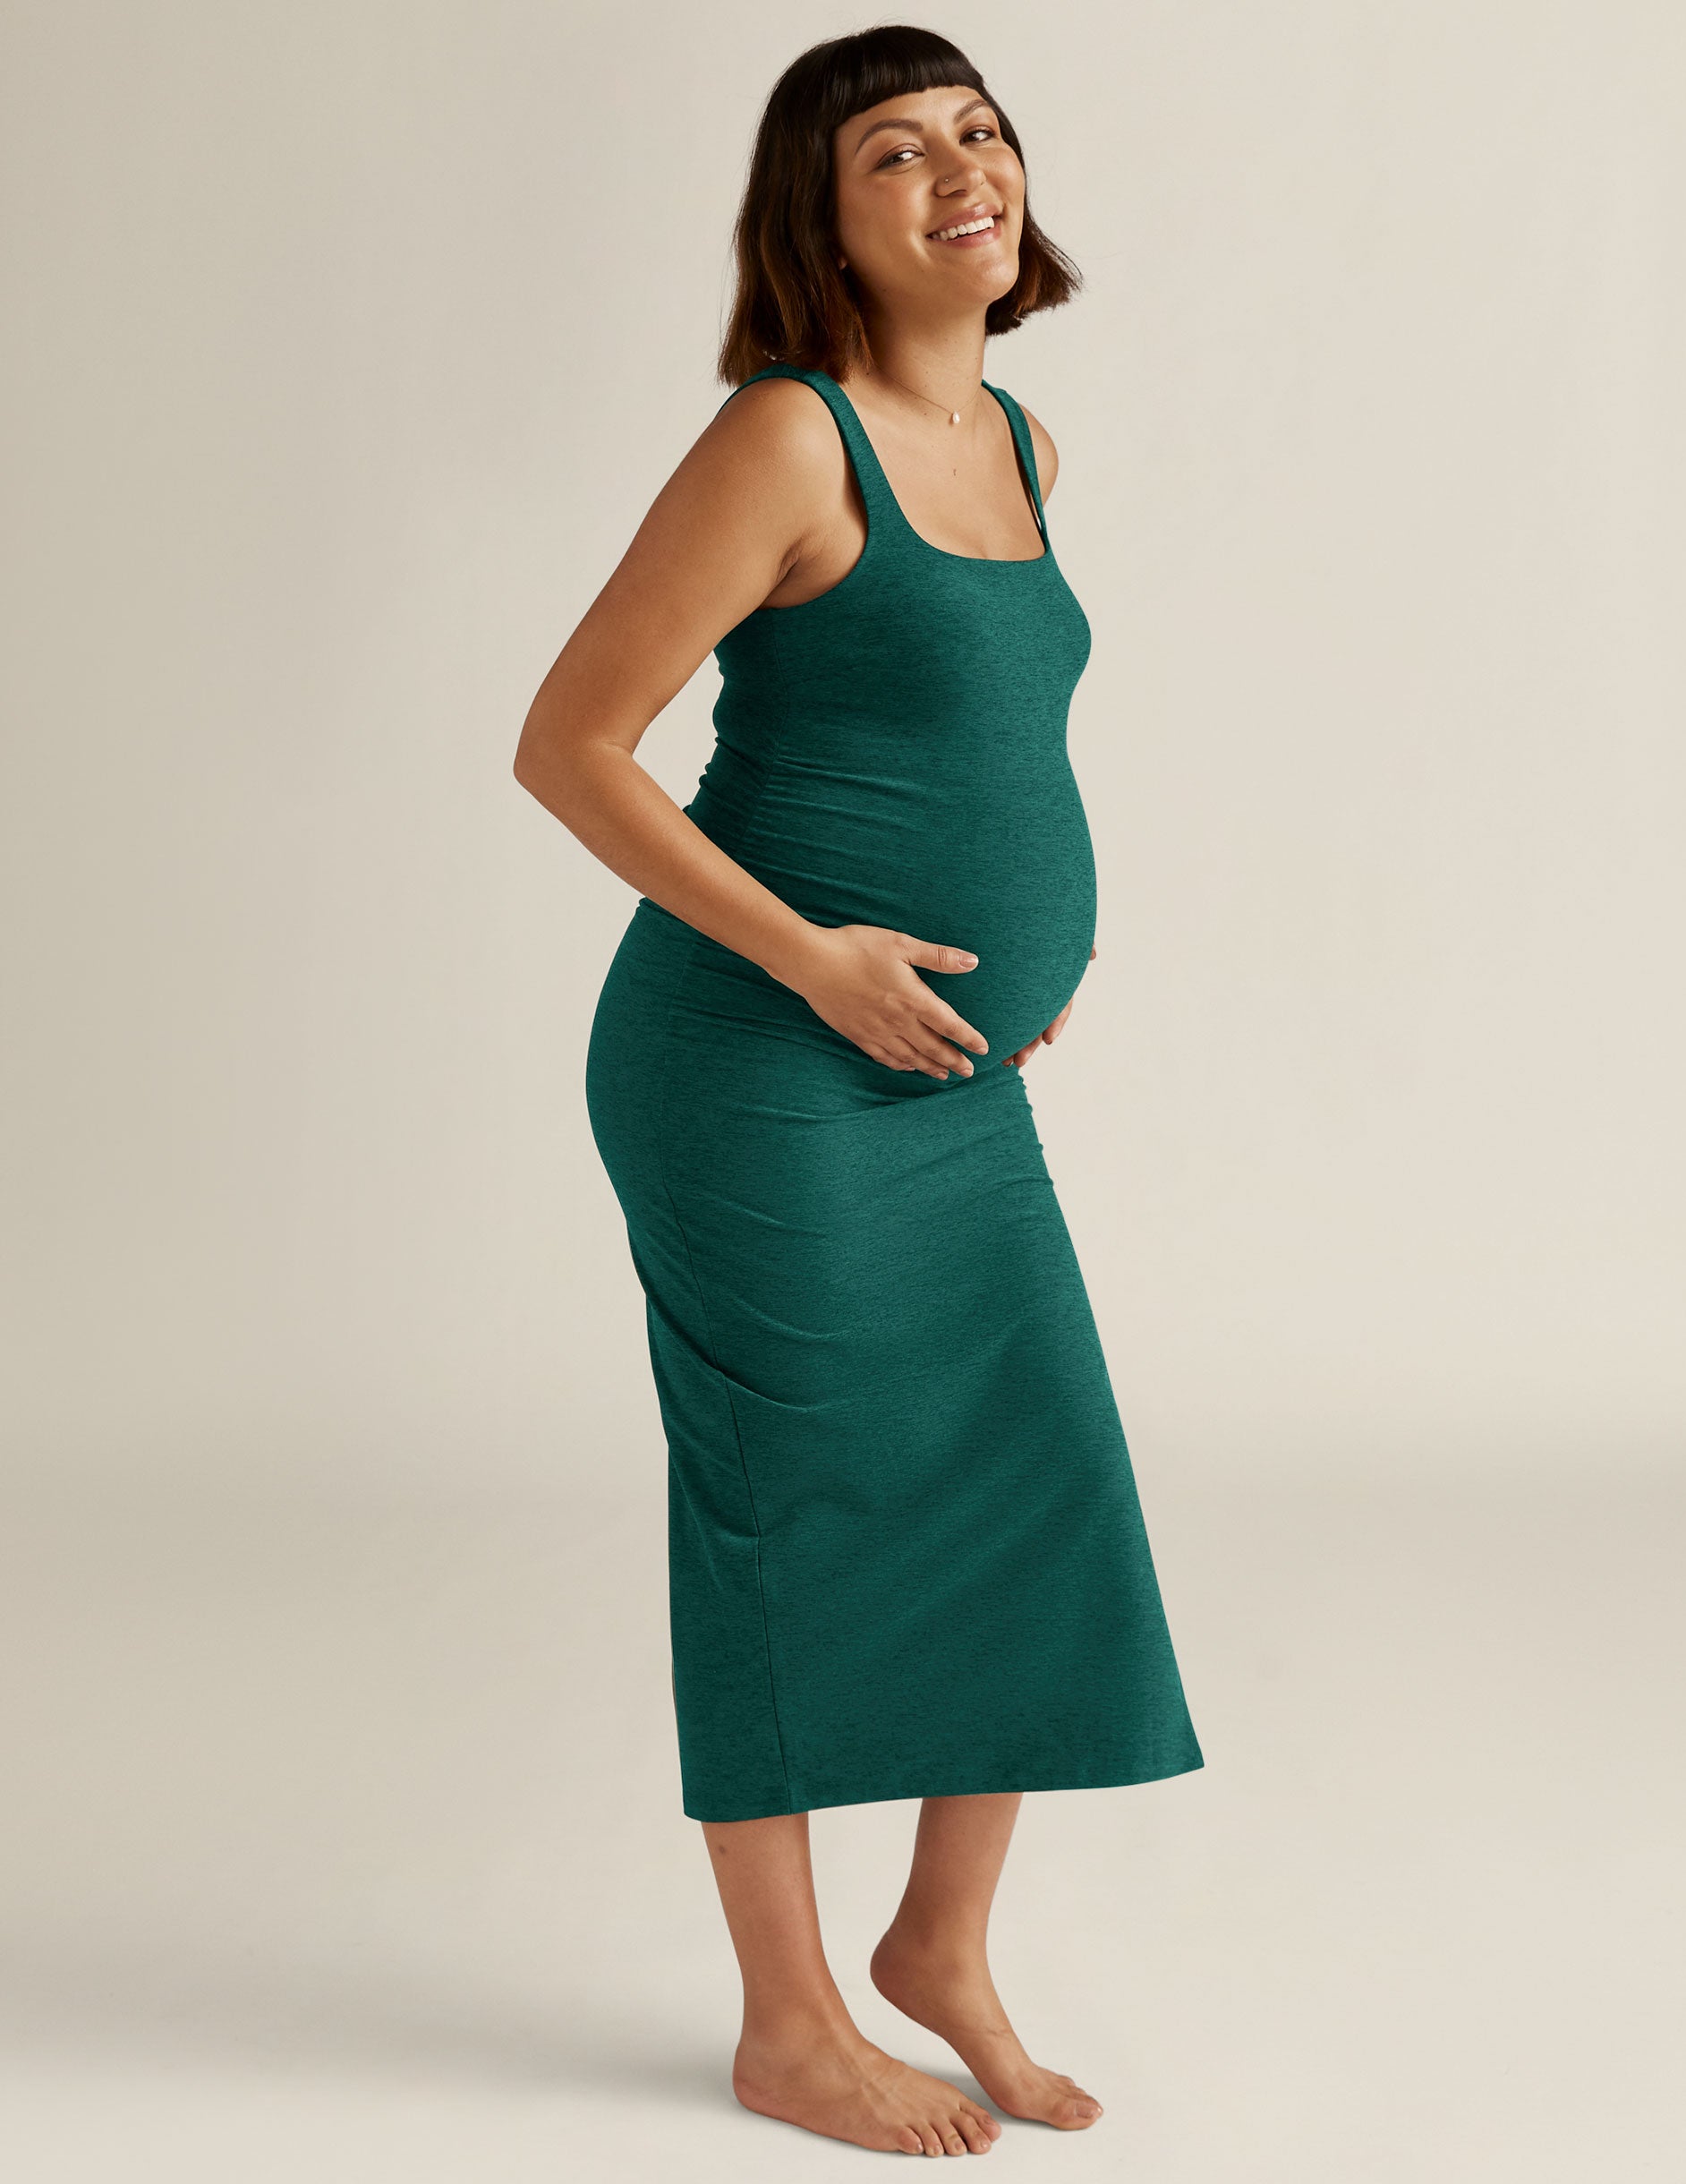 emerald green maternity dress